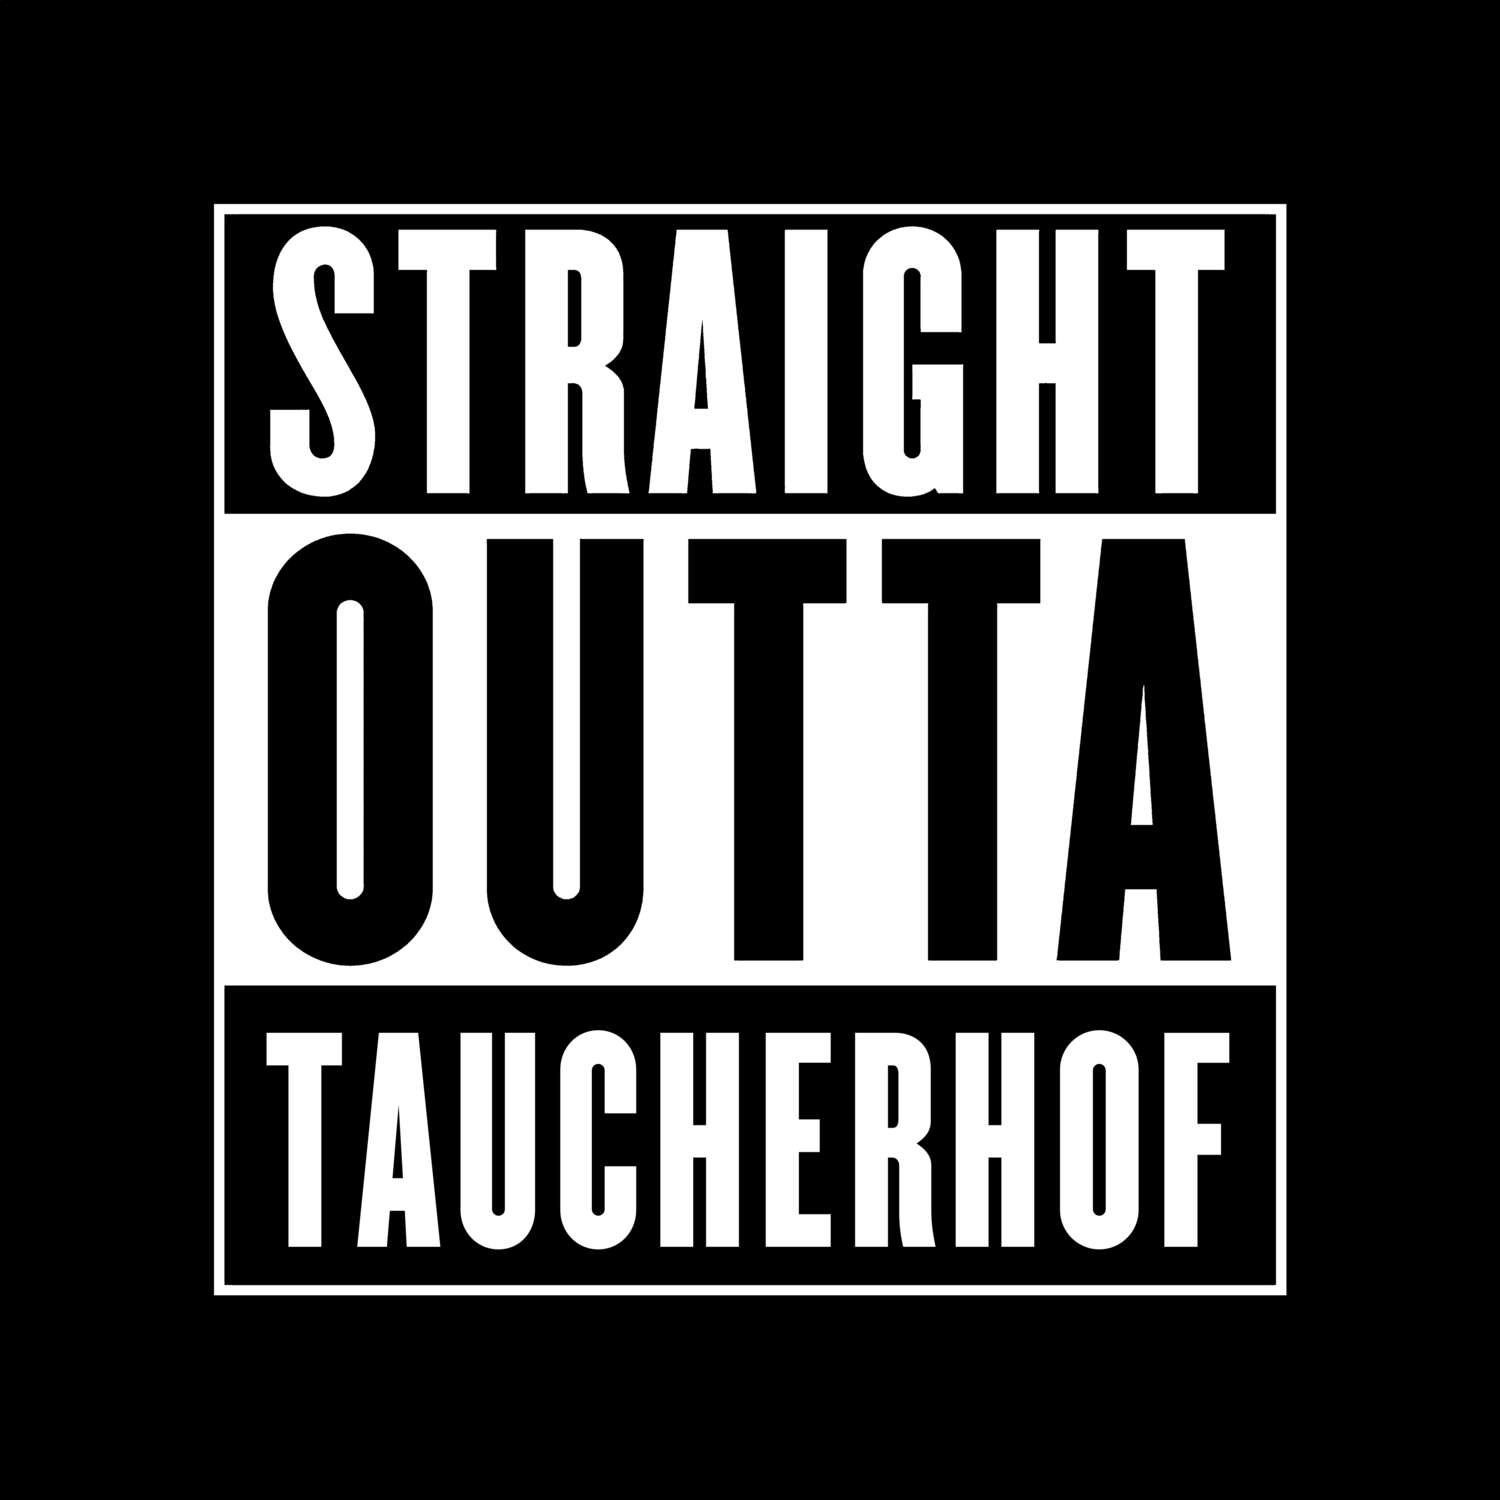 Taucherhof T-Shirt »Straight Outta«